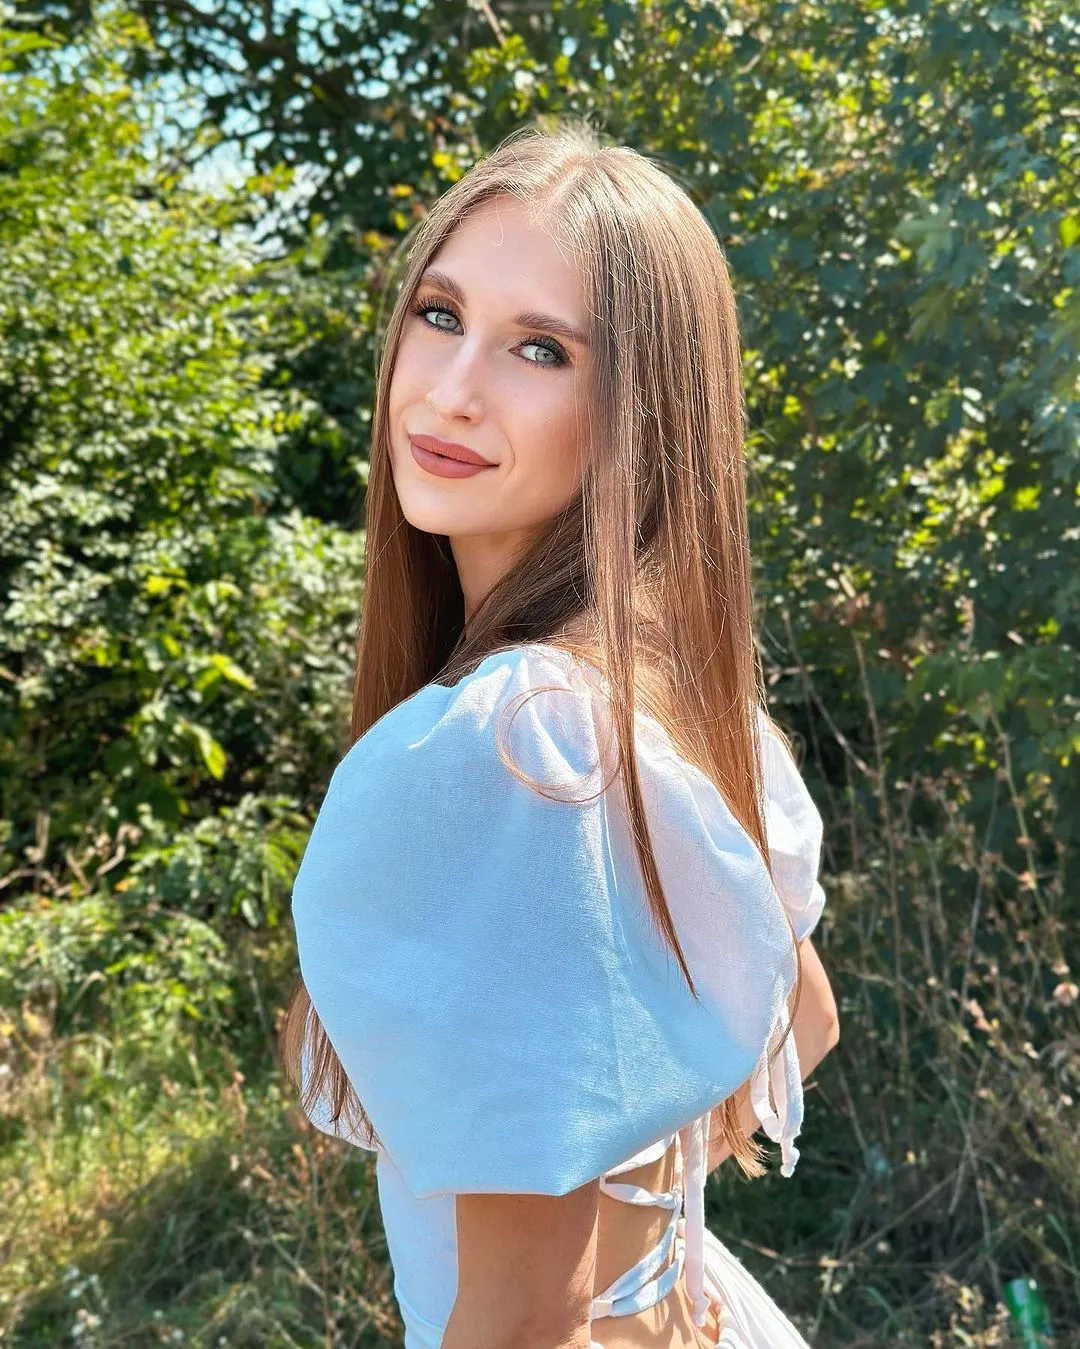 Olga russian dating live.com